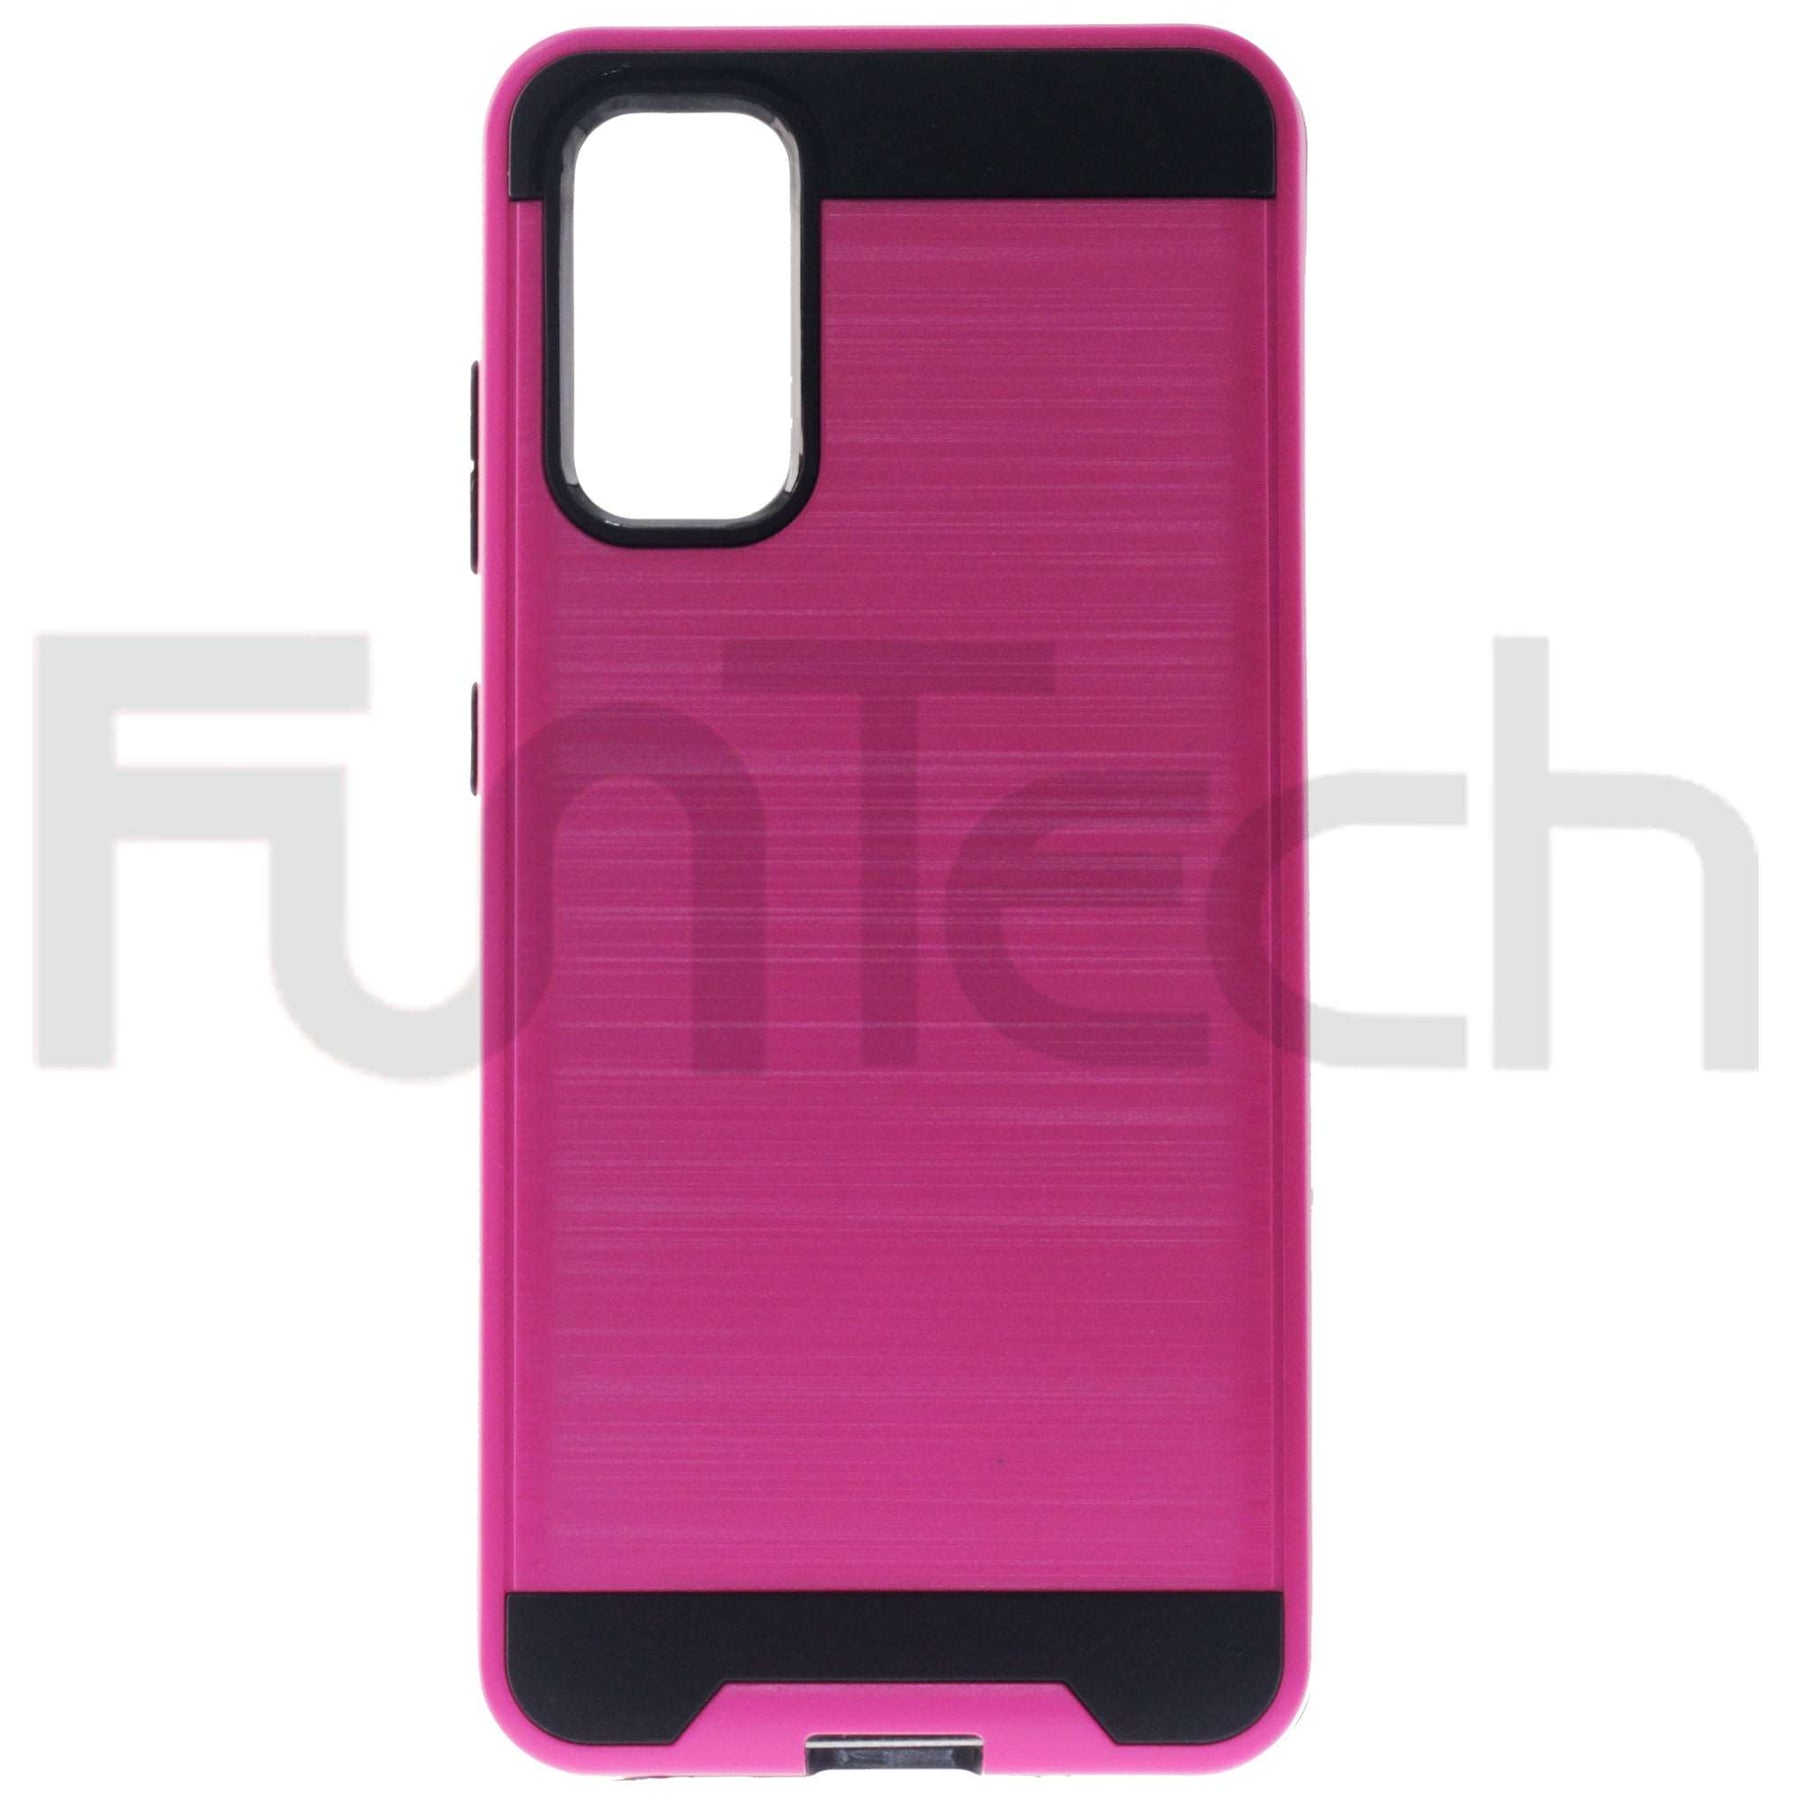 Samsung S20, Slim Armor Case, Color Pink.